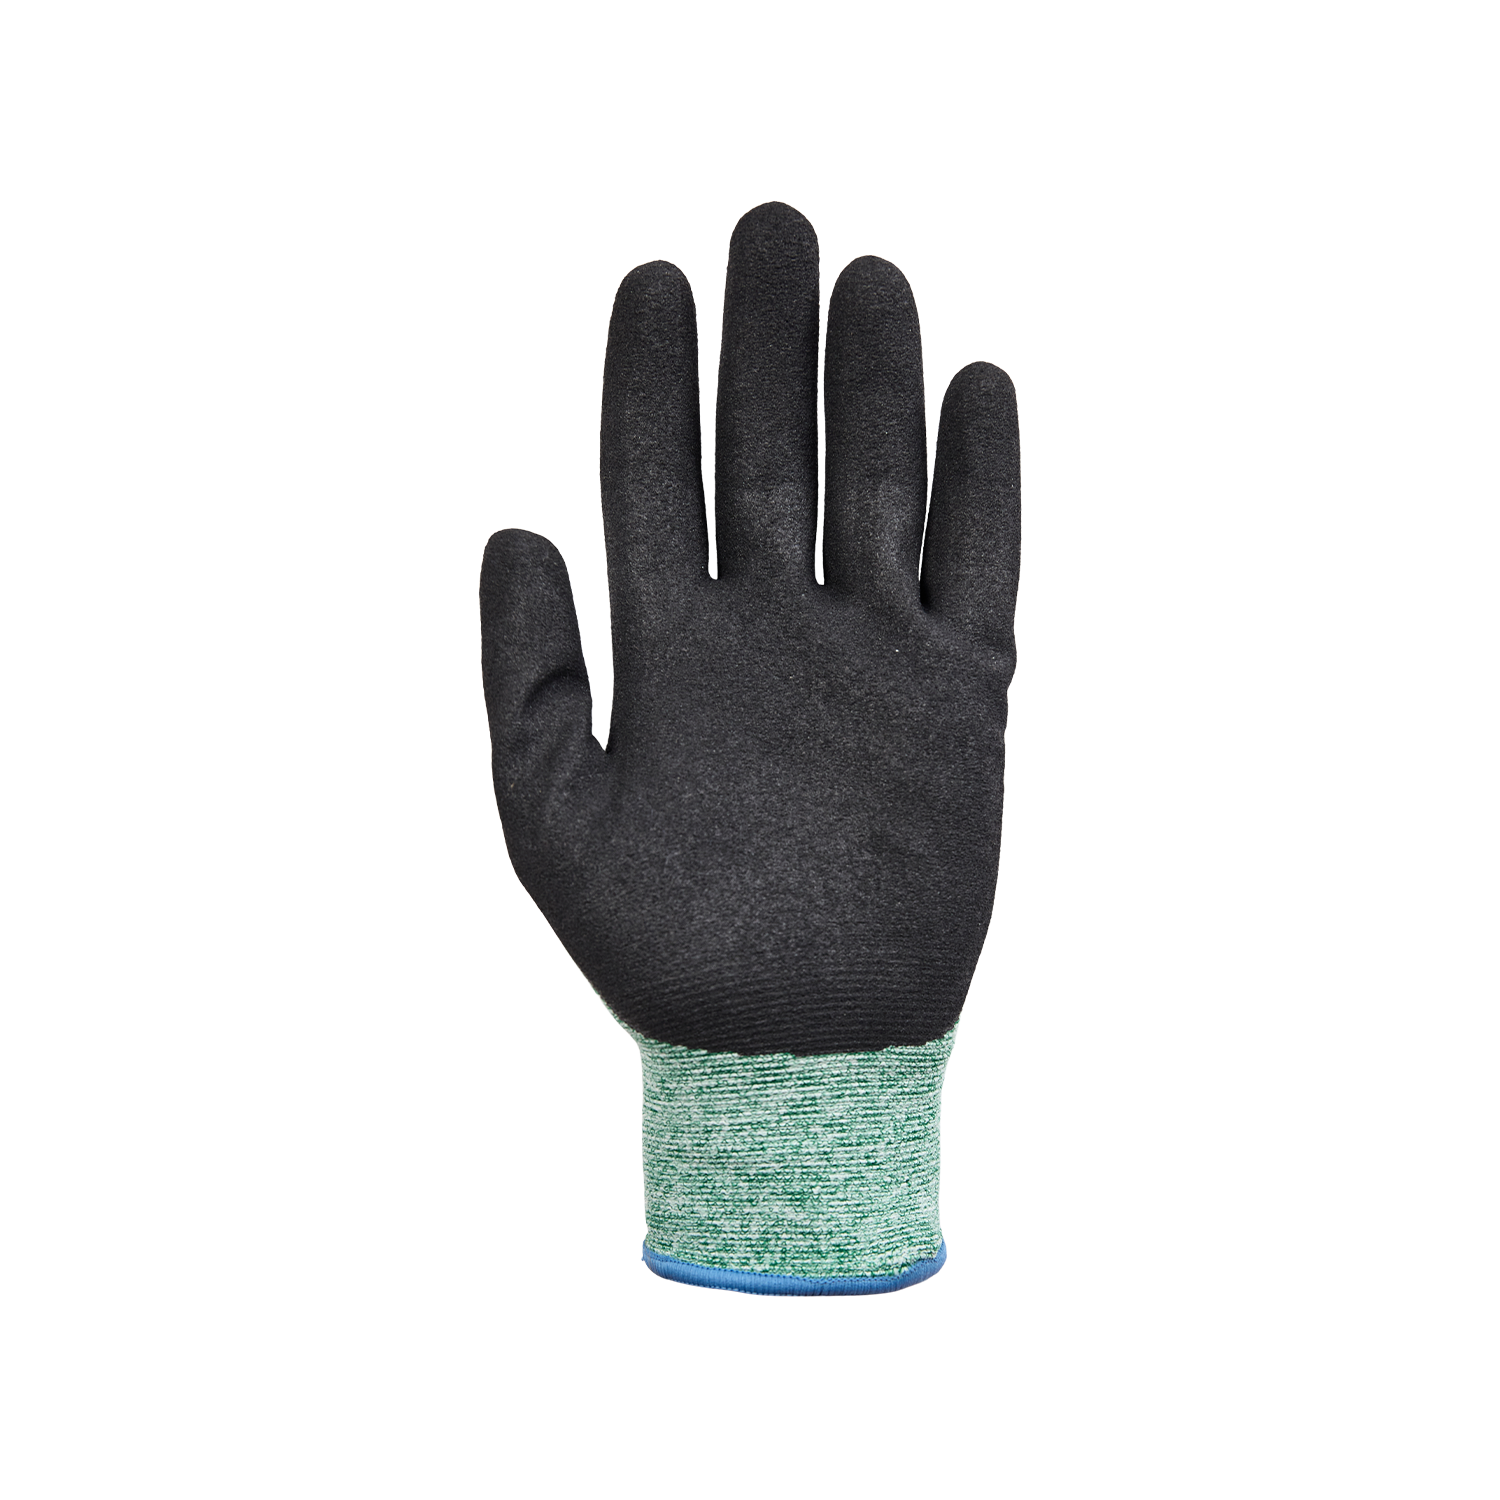 NORSE Eco Flex Original assembly gloves size 10